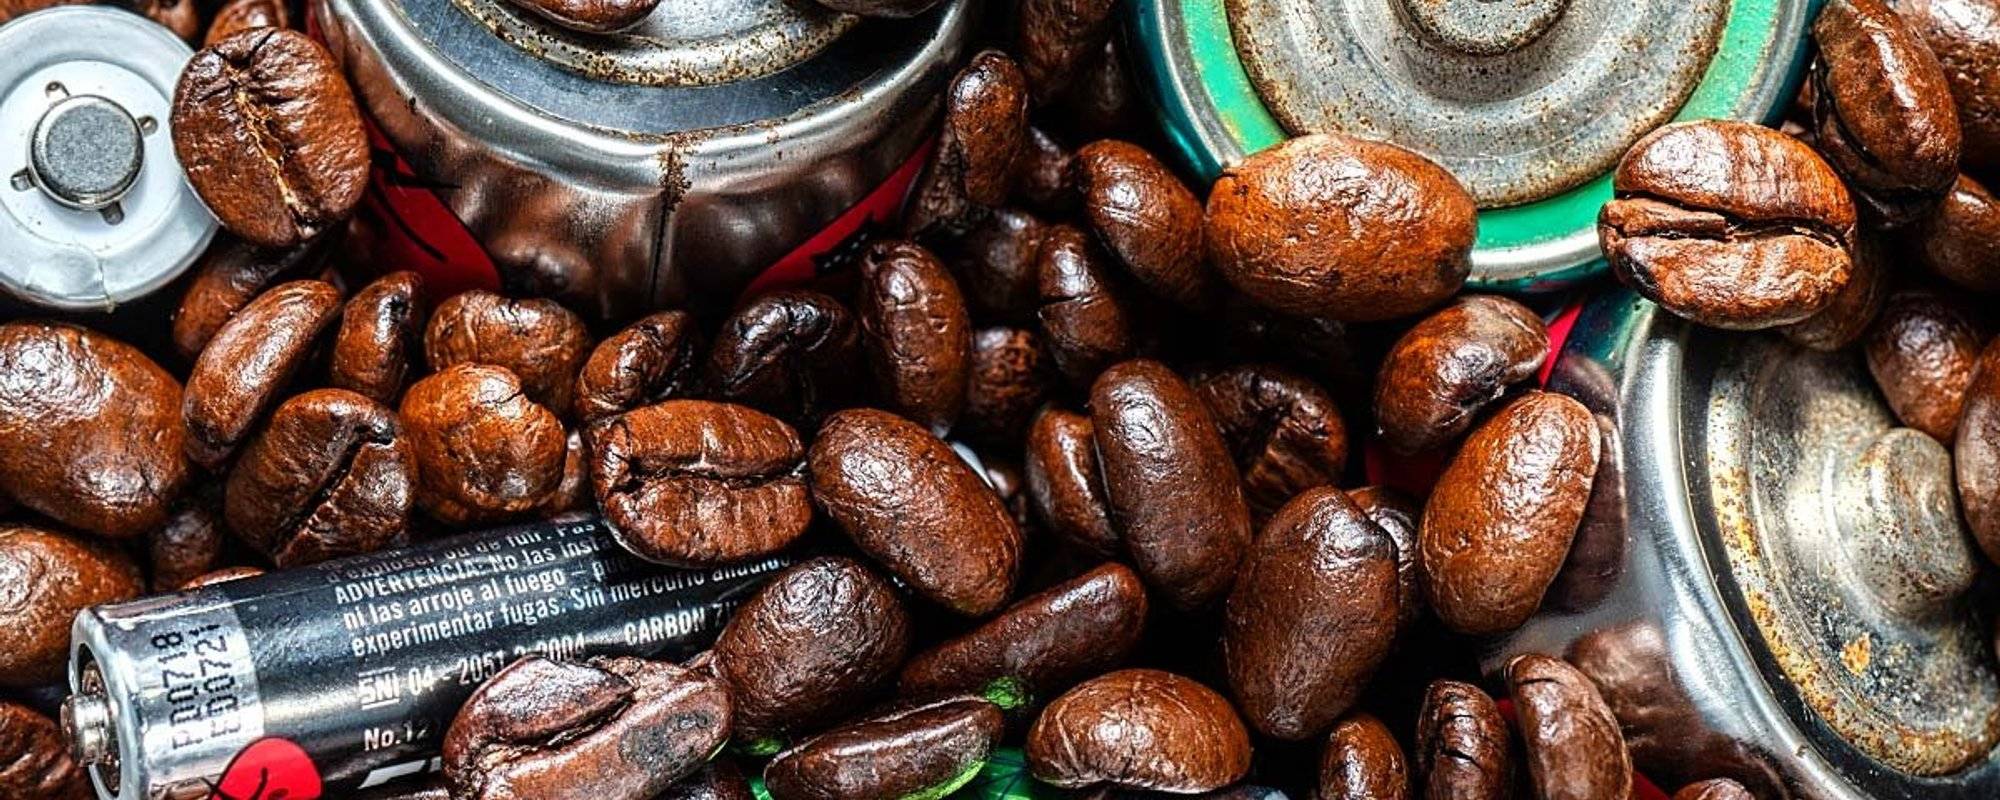 Battery Coffee - A Toxic Drink In Vietnam